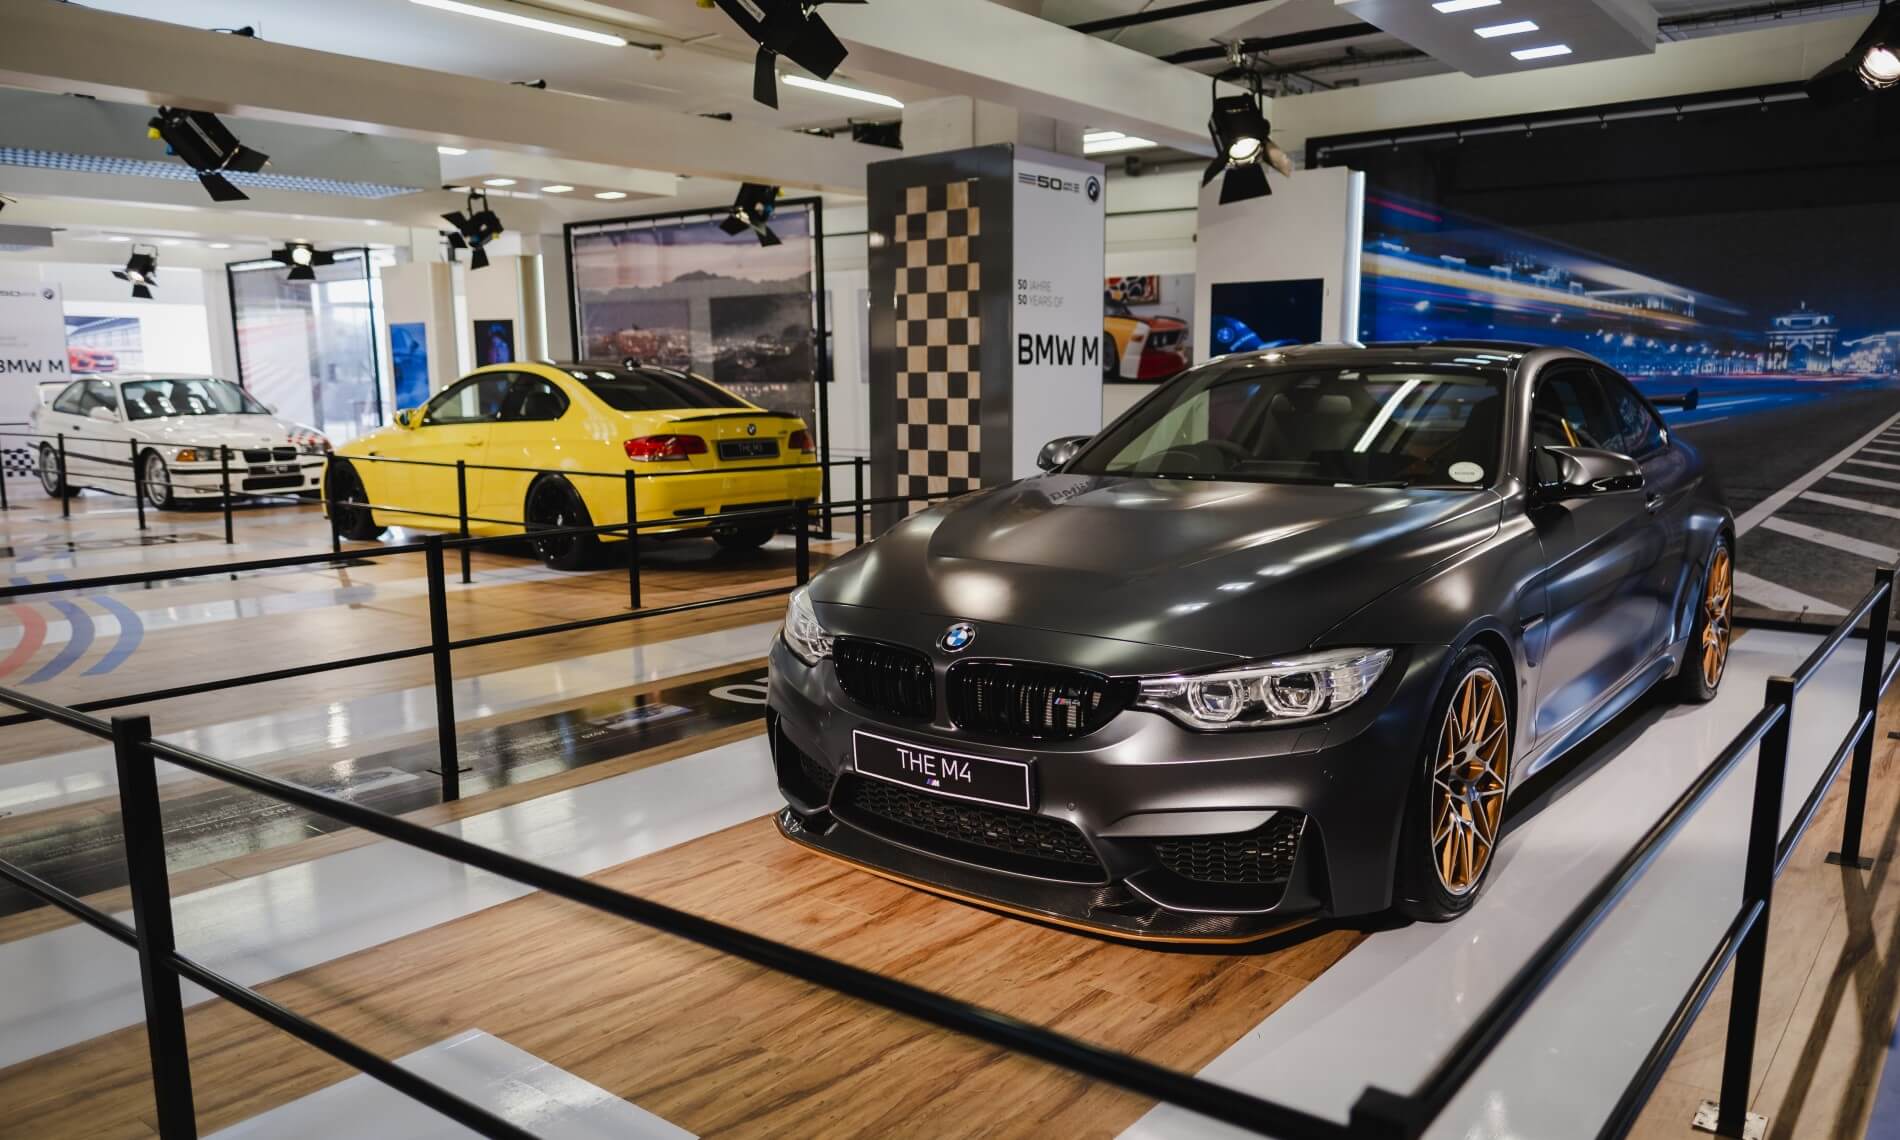 BMW M3 heritage display